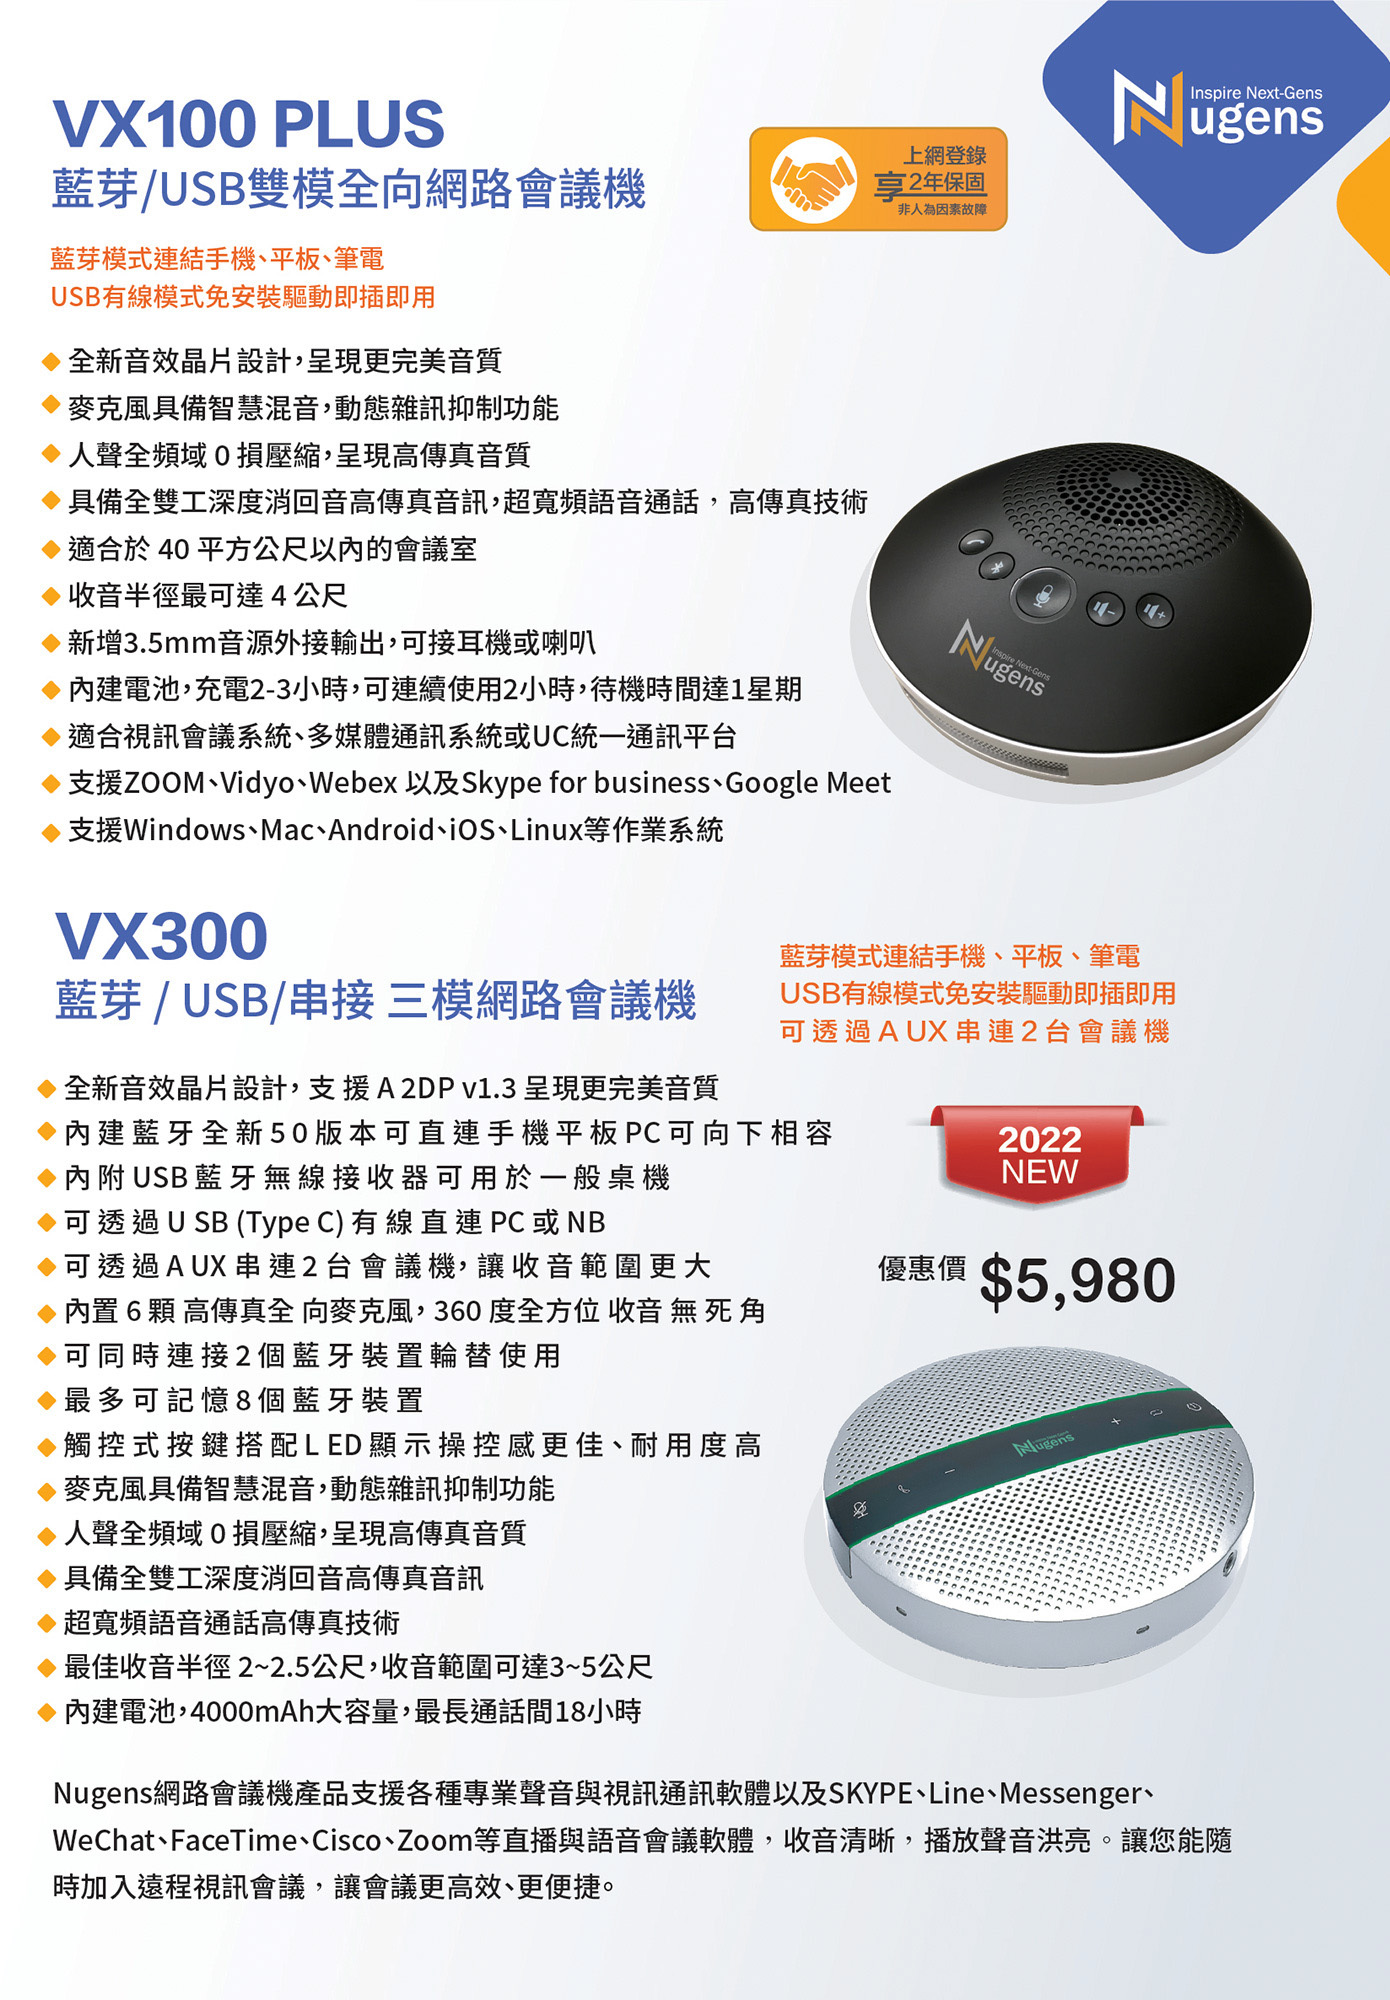 VX100 PLUS 藍芽/USB雙模全向網路會議機